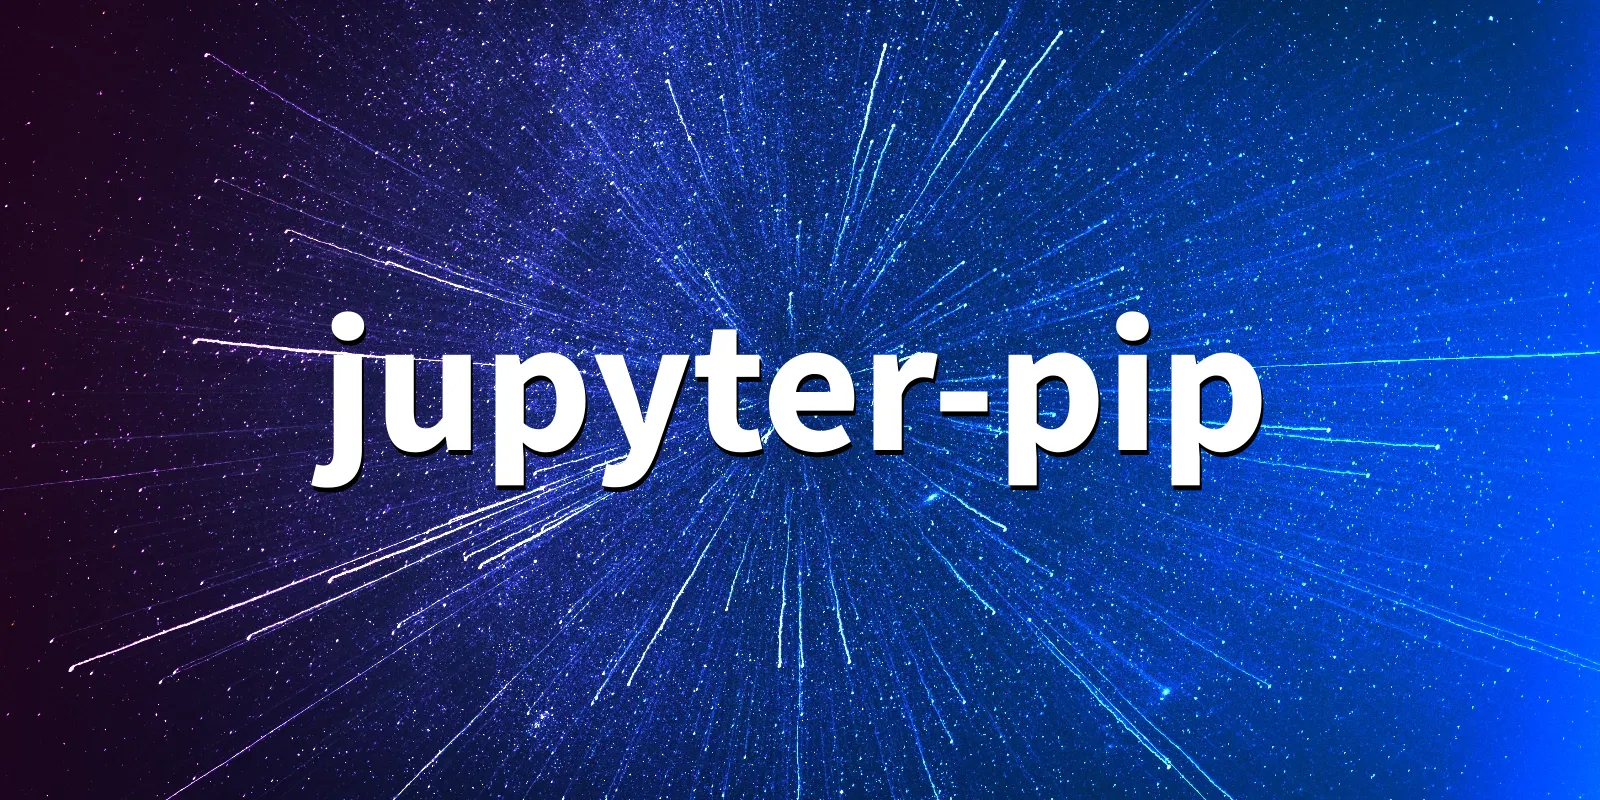 /pkg/j/jupyter-pip/jupyter-pip-banner.webp